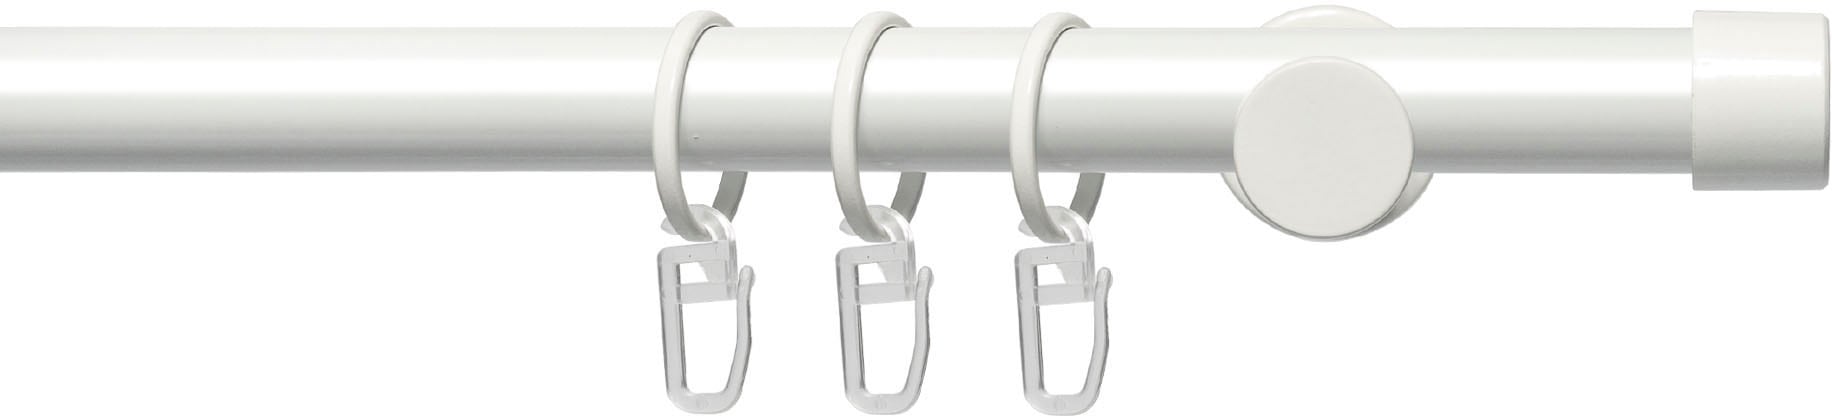 Liedeco Gardinenstange »Fertigstilgarnitur 20 mm Power Endkappe«, 1  läufig-läufig, Fixmaß, Gardinenstange Komplett kaufen bei OTTO | Gardinenstangenhalter